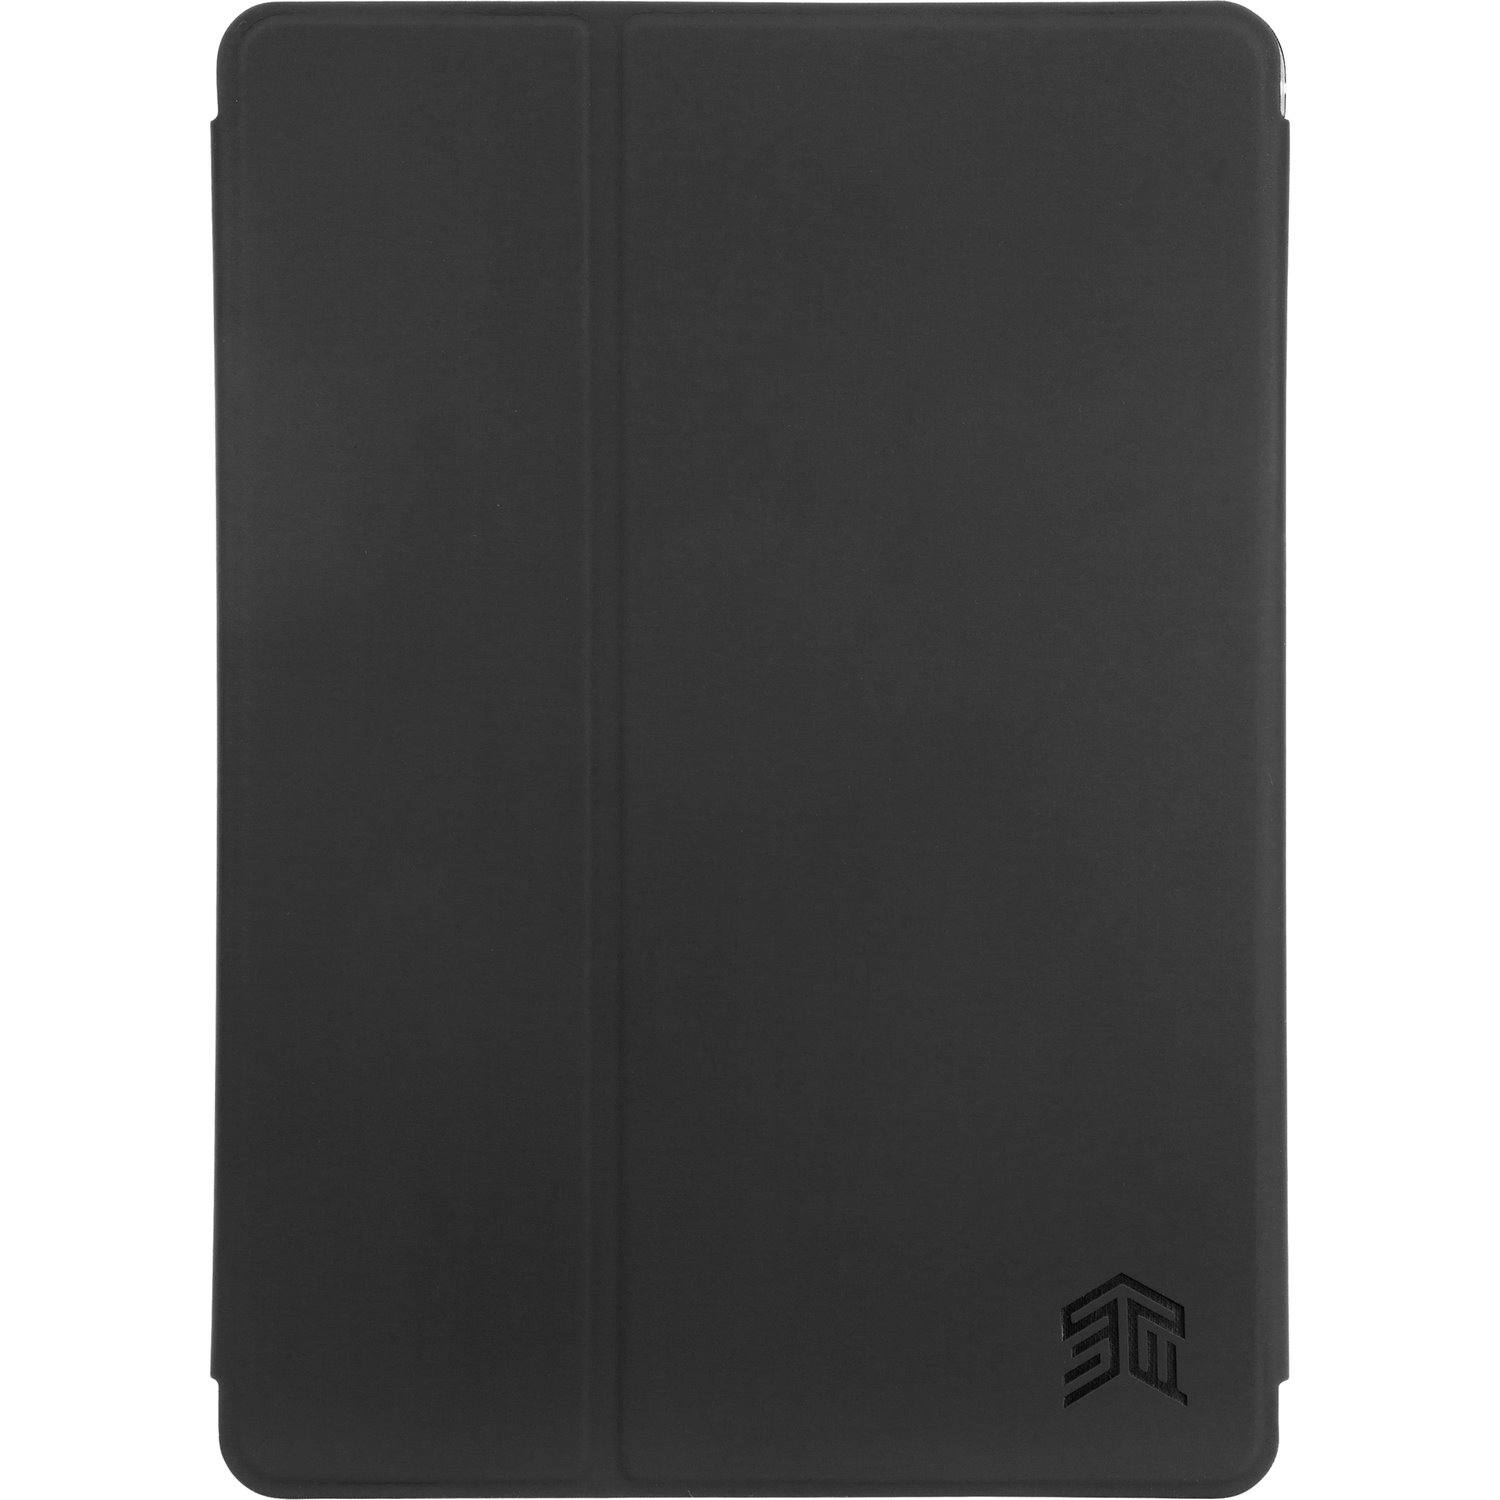 STM Goods Studio iPad Mini 5th Gen/Mini 4 Case - 2018 - Black/Smoke - Retail Box